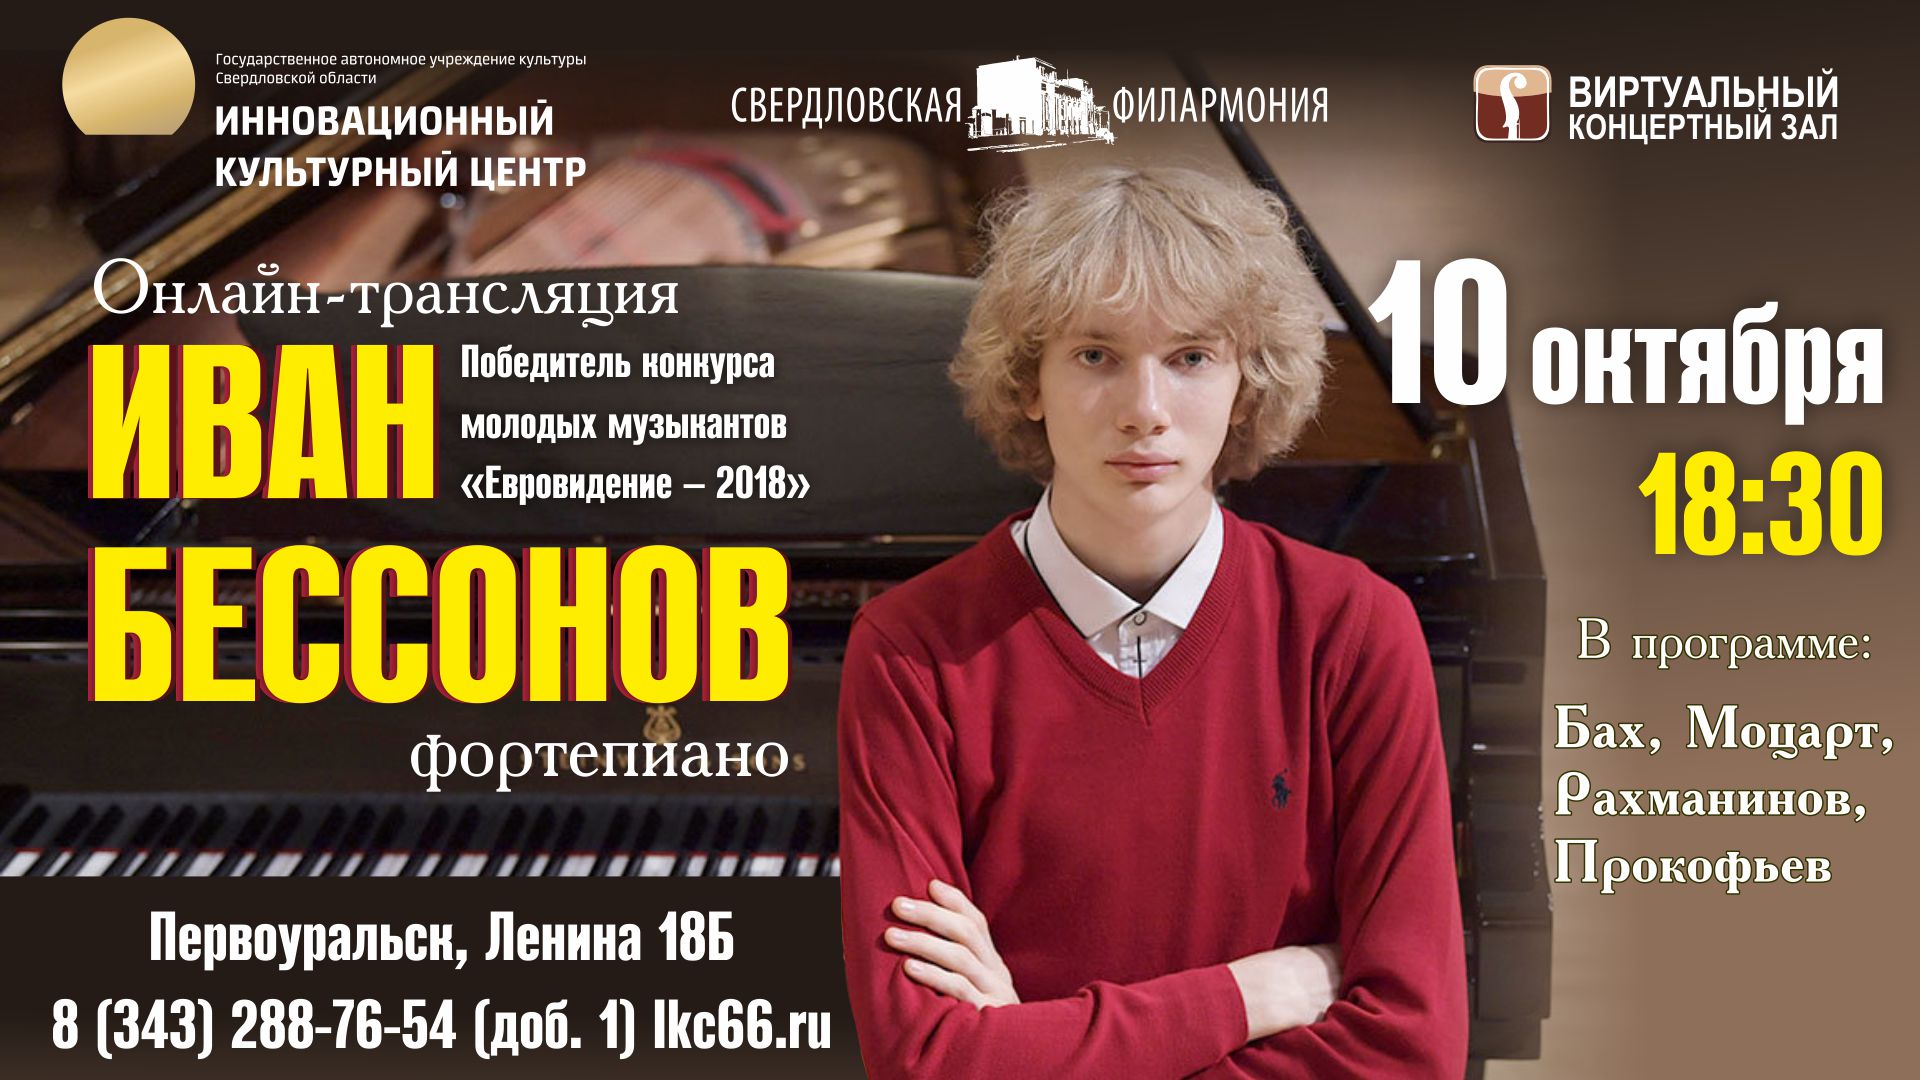 Концерт пианиста Ивана Бессонова